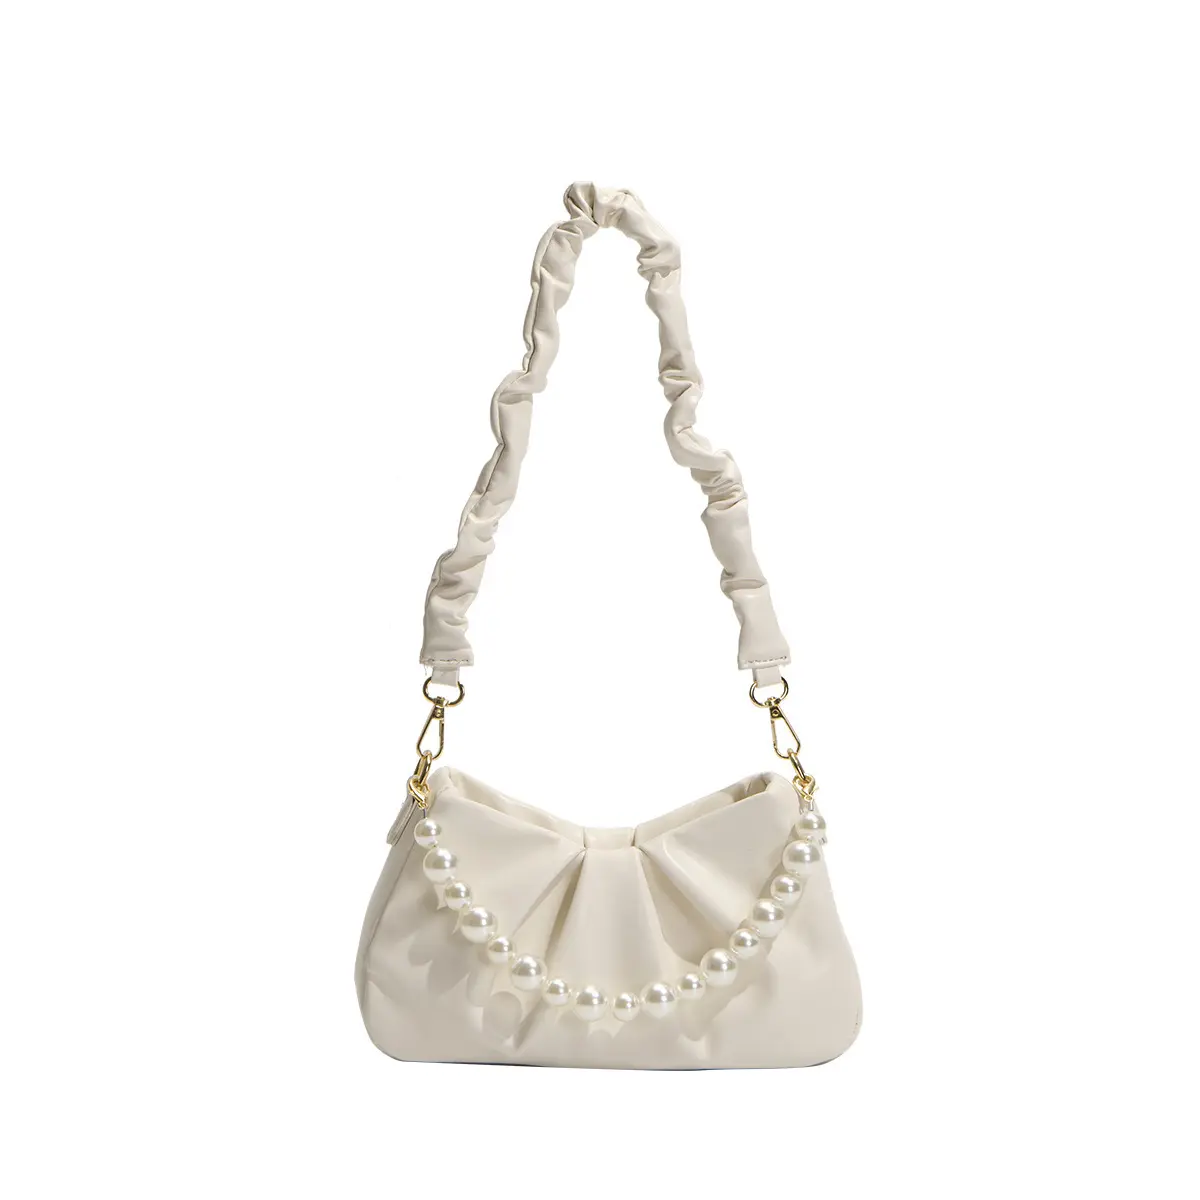 wholesale women's premium handbag high quality Cloud pearls handbag laundry bags with shoulder strap trendy bags for girls